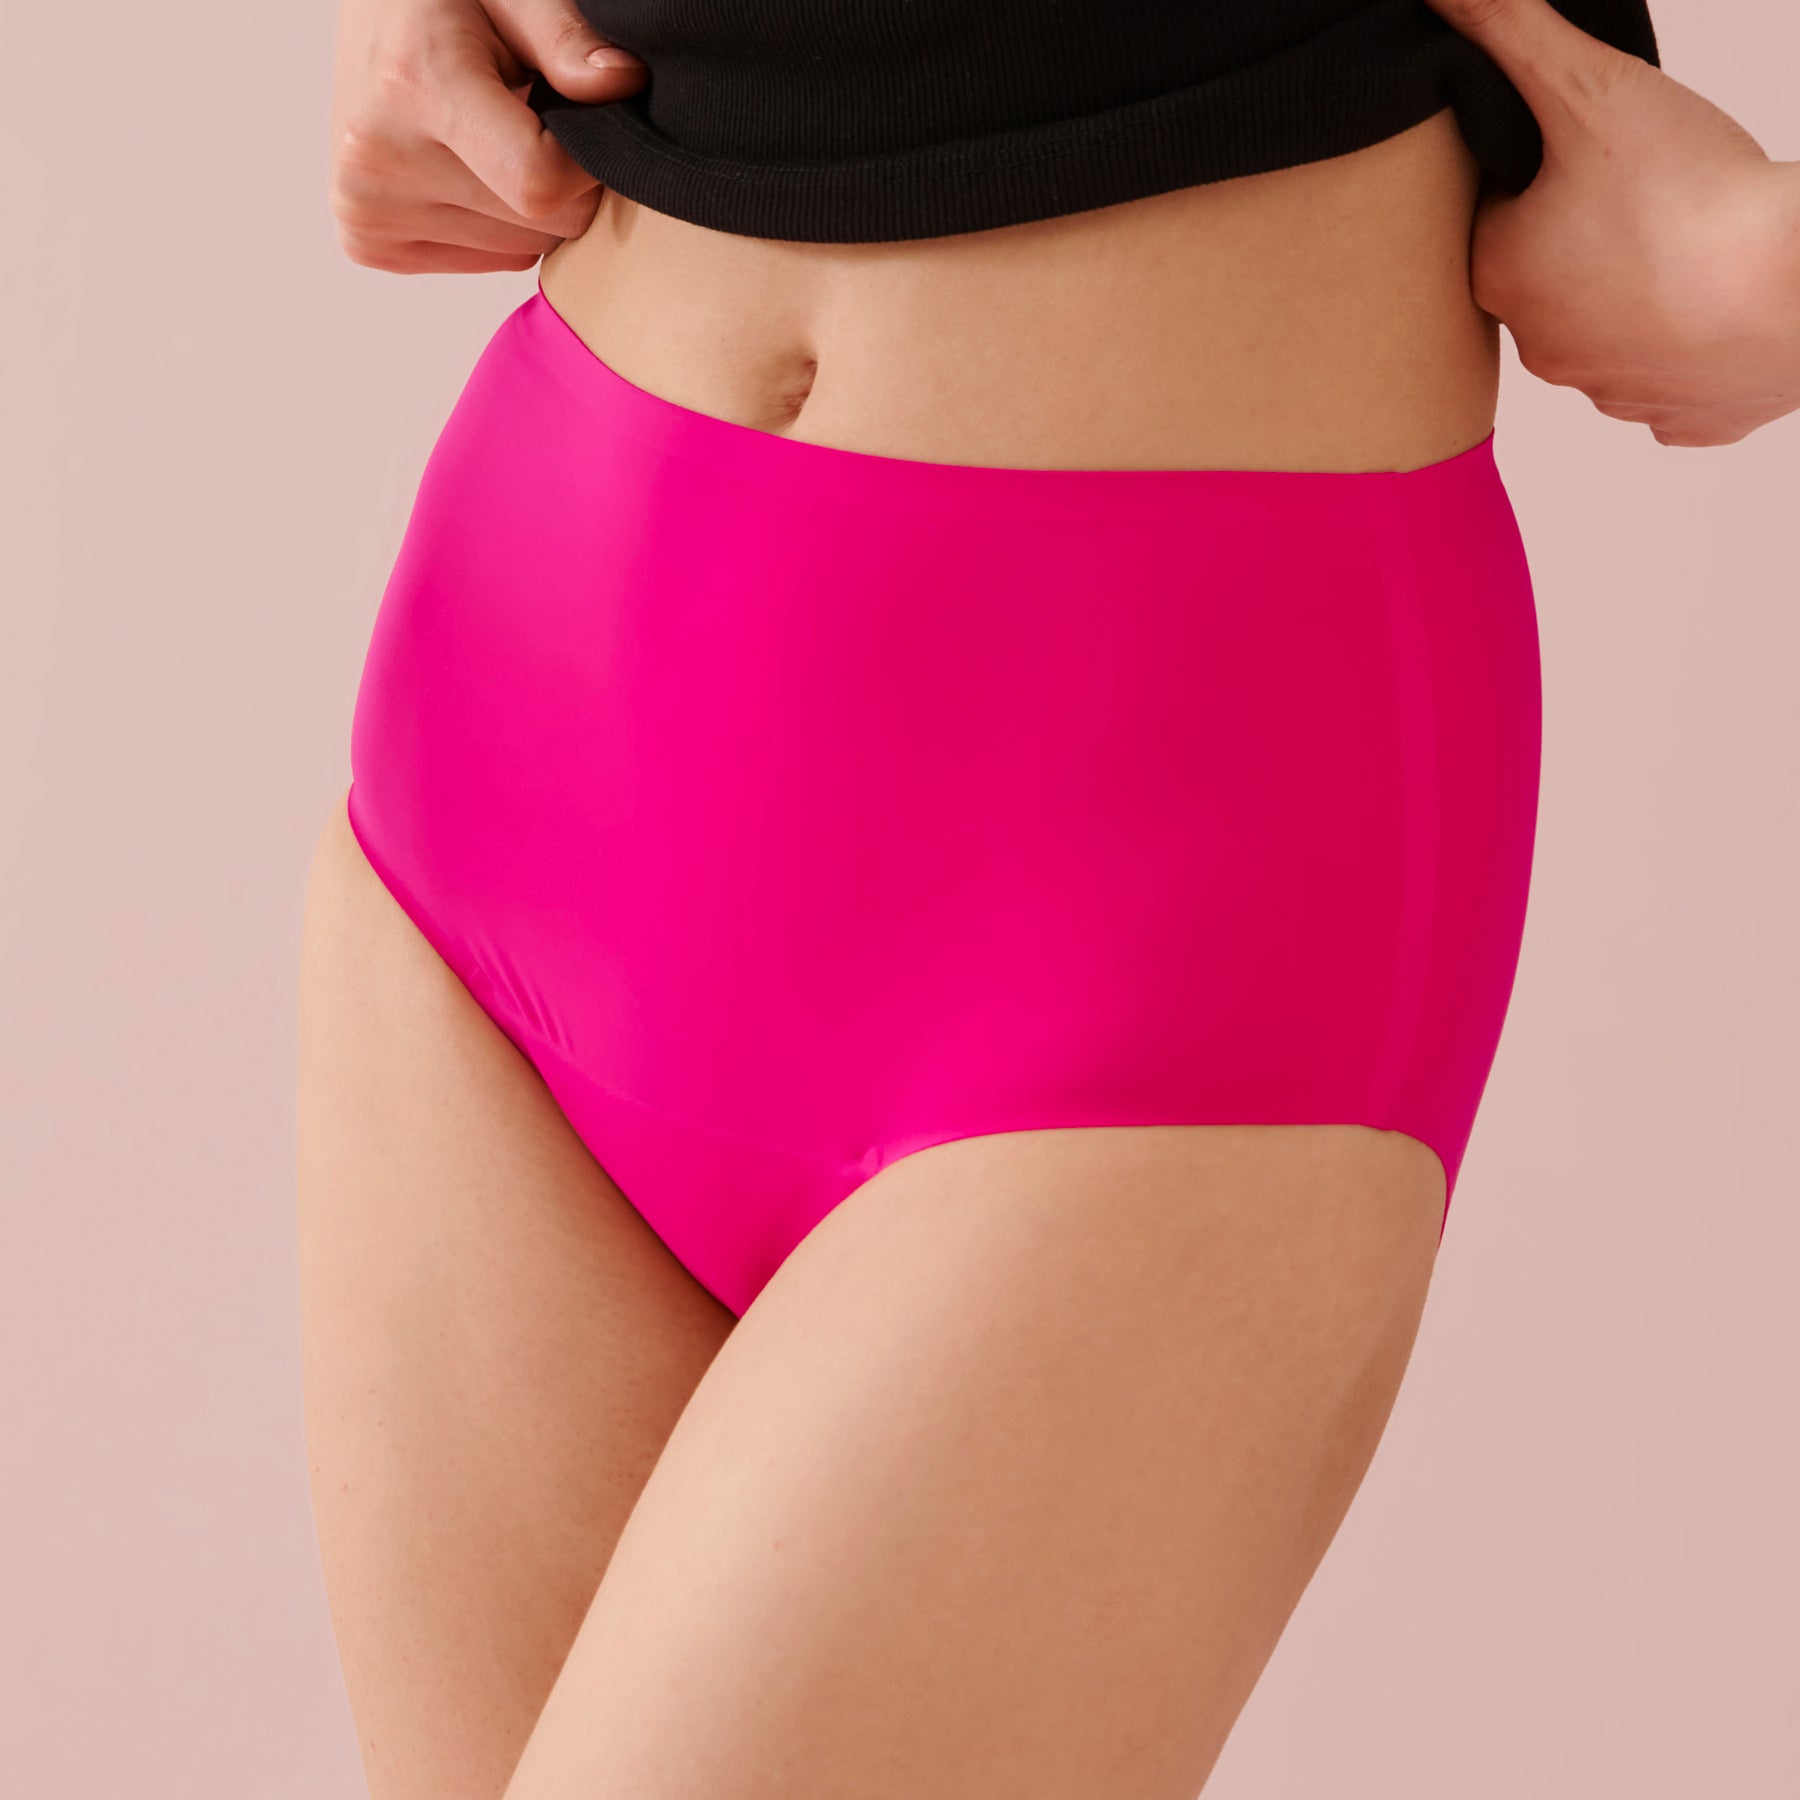 Front of the pink high waist bikini period panty - NEWEX